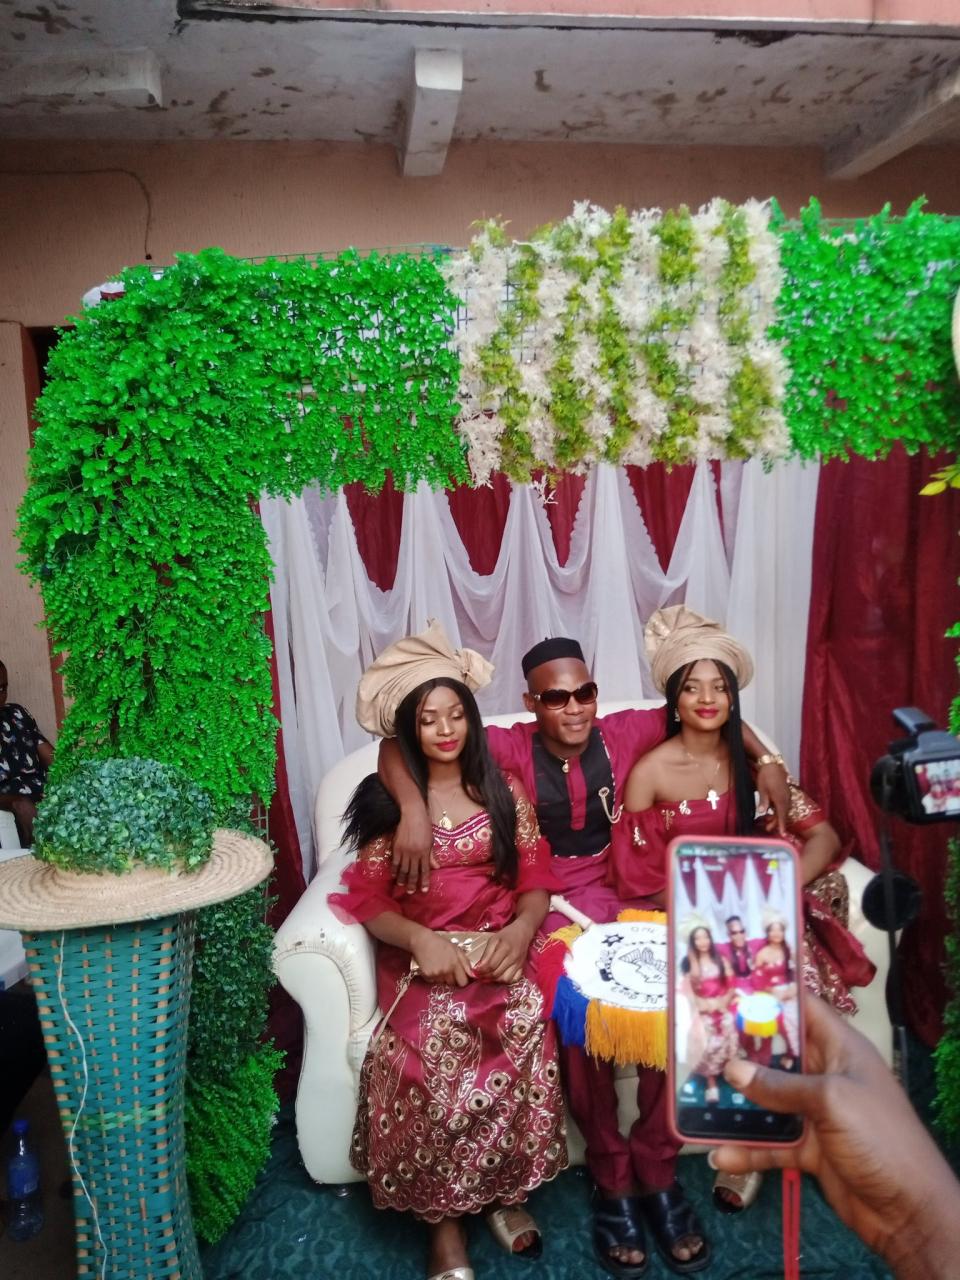 Nigerian man marries twins because